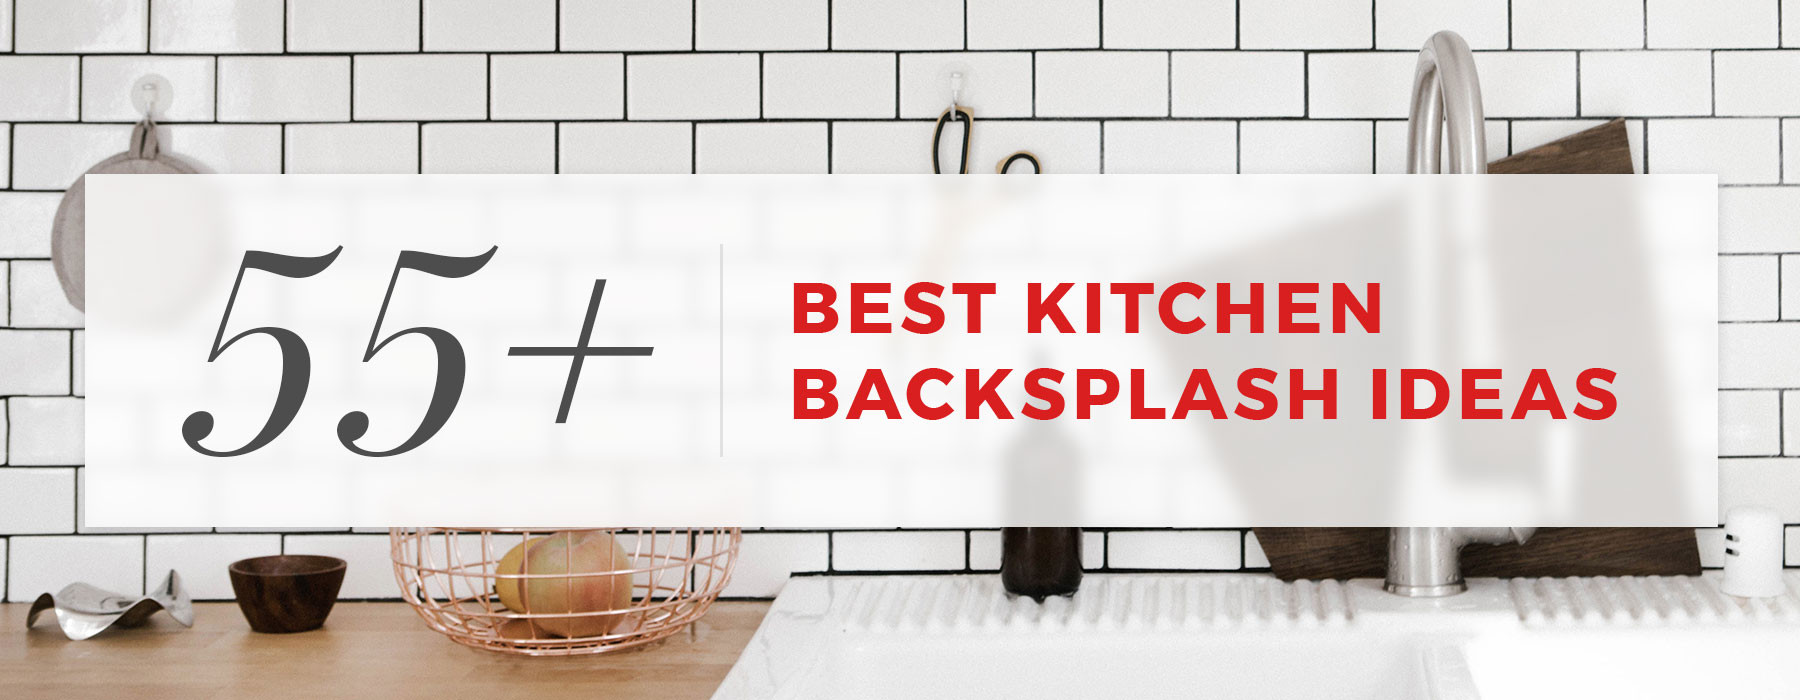 Kitchen Backsplash Ideas 2019
 55 Best Kitchen Backsplash Ideas for 2019